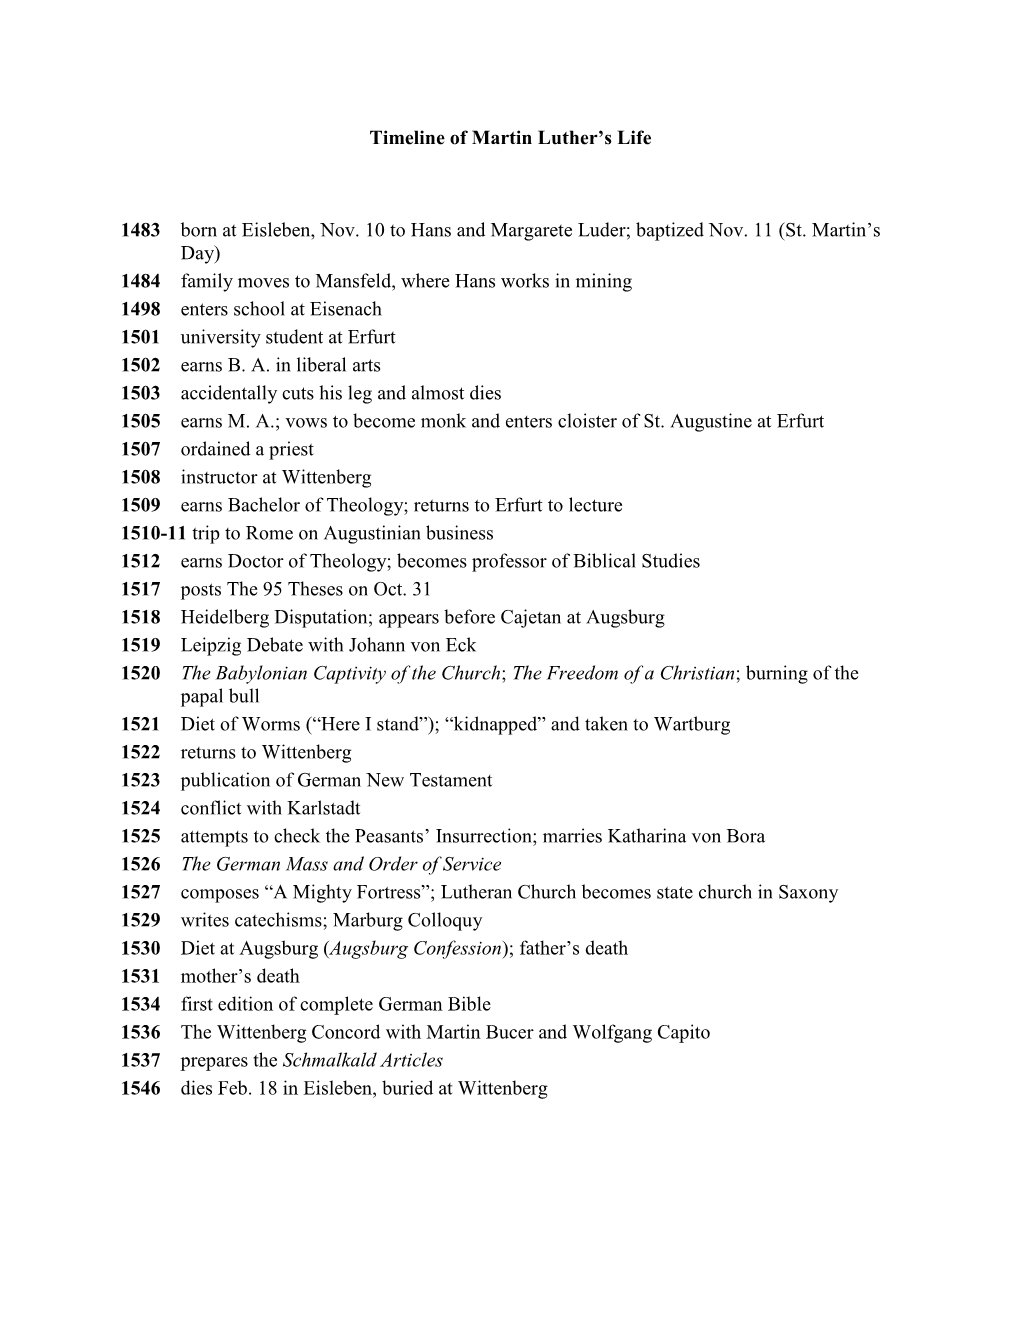 Timeline of Martin Luther's Life 1483 Born at Eisleben